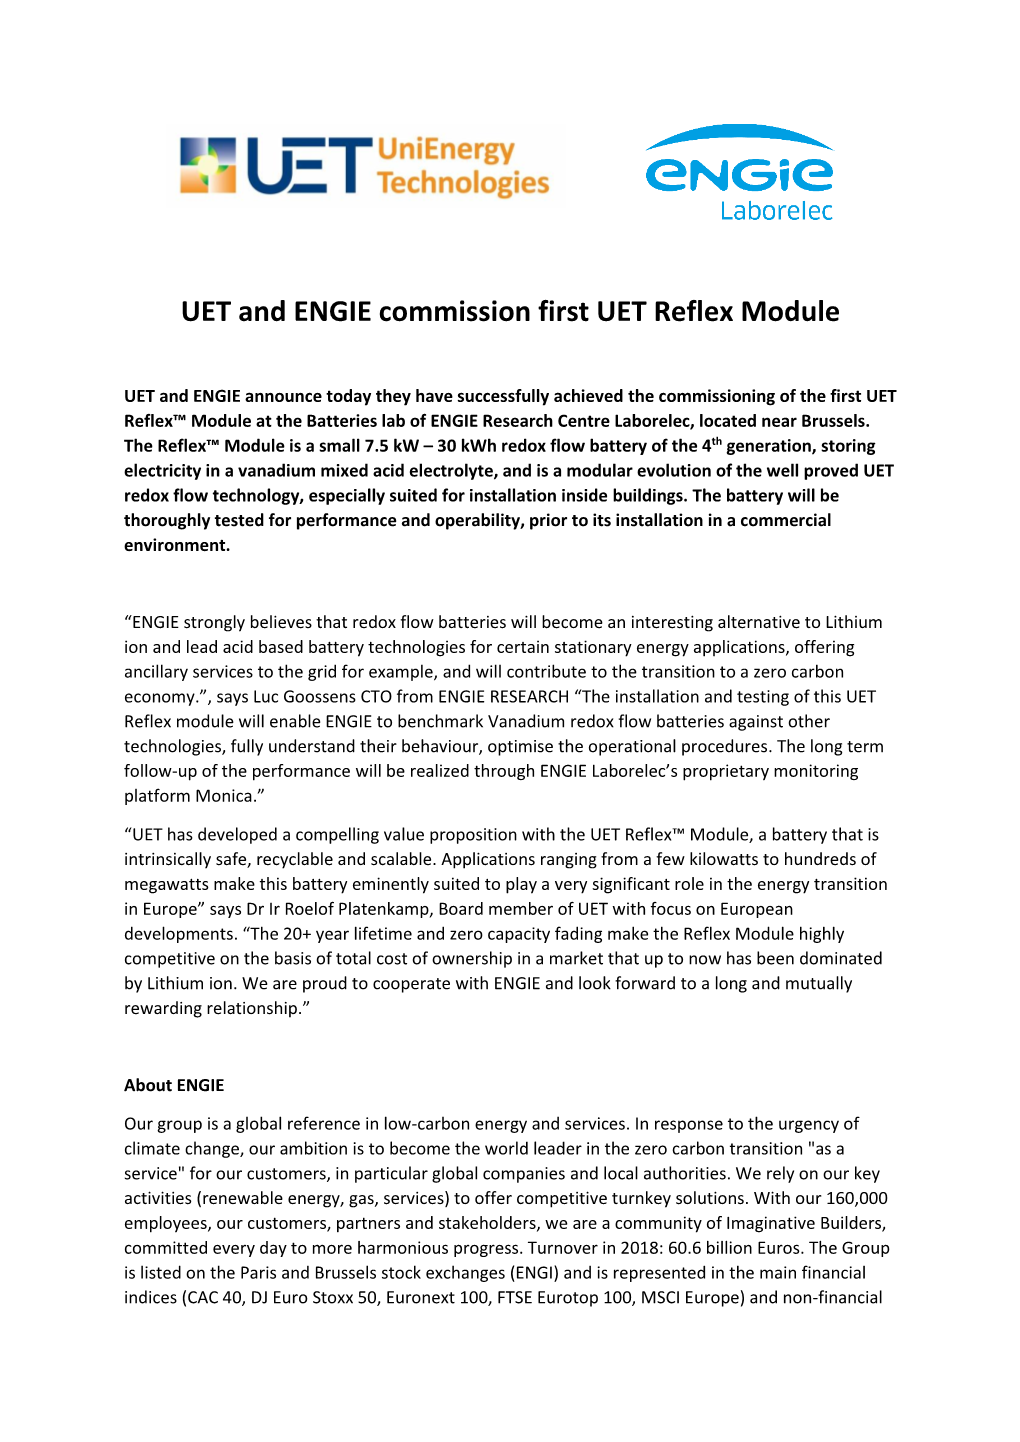 UET and ENGIE Commission First UET Reflex Module